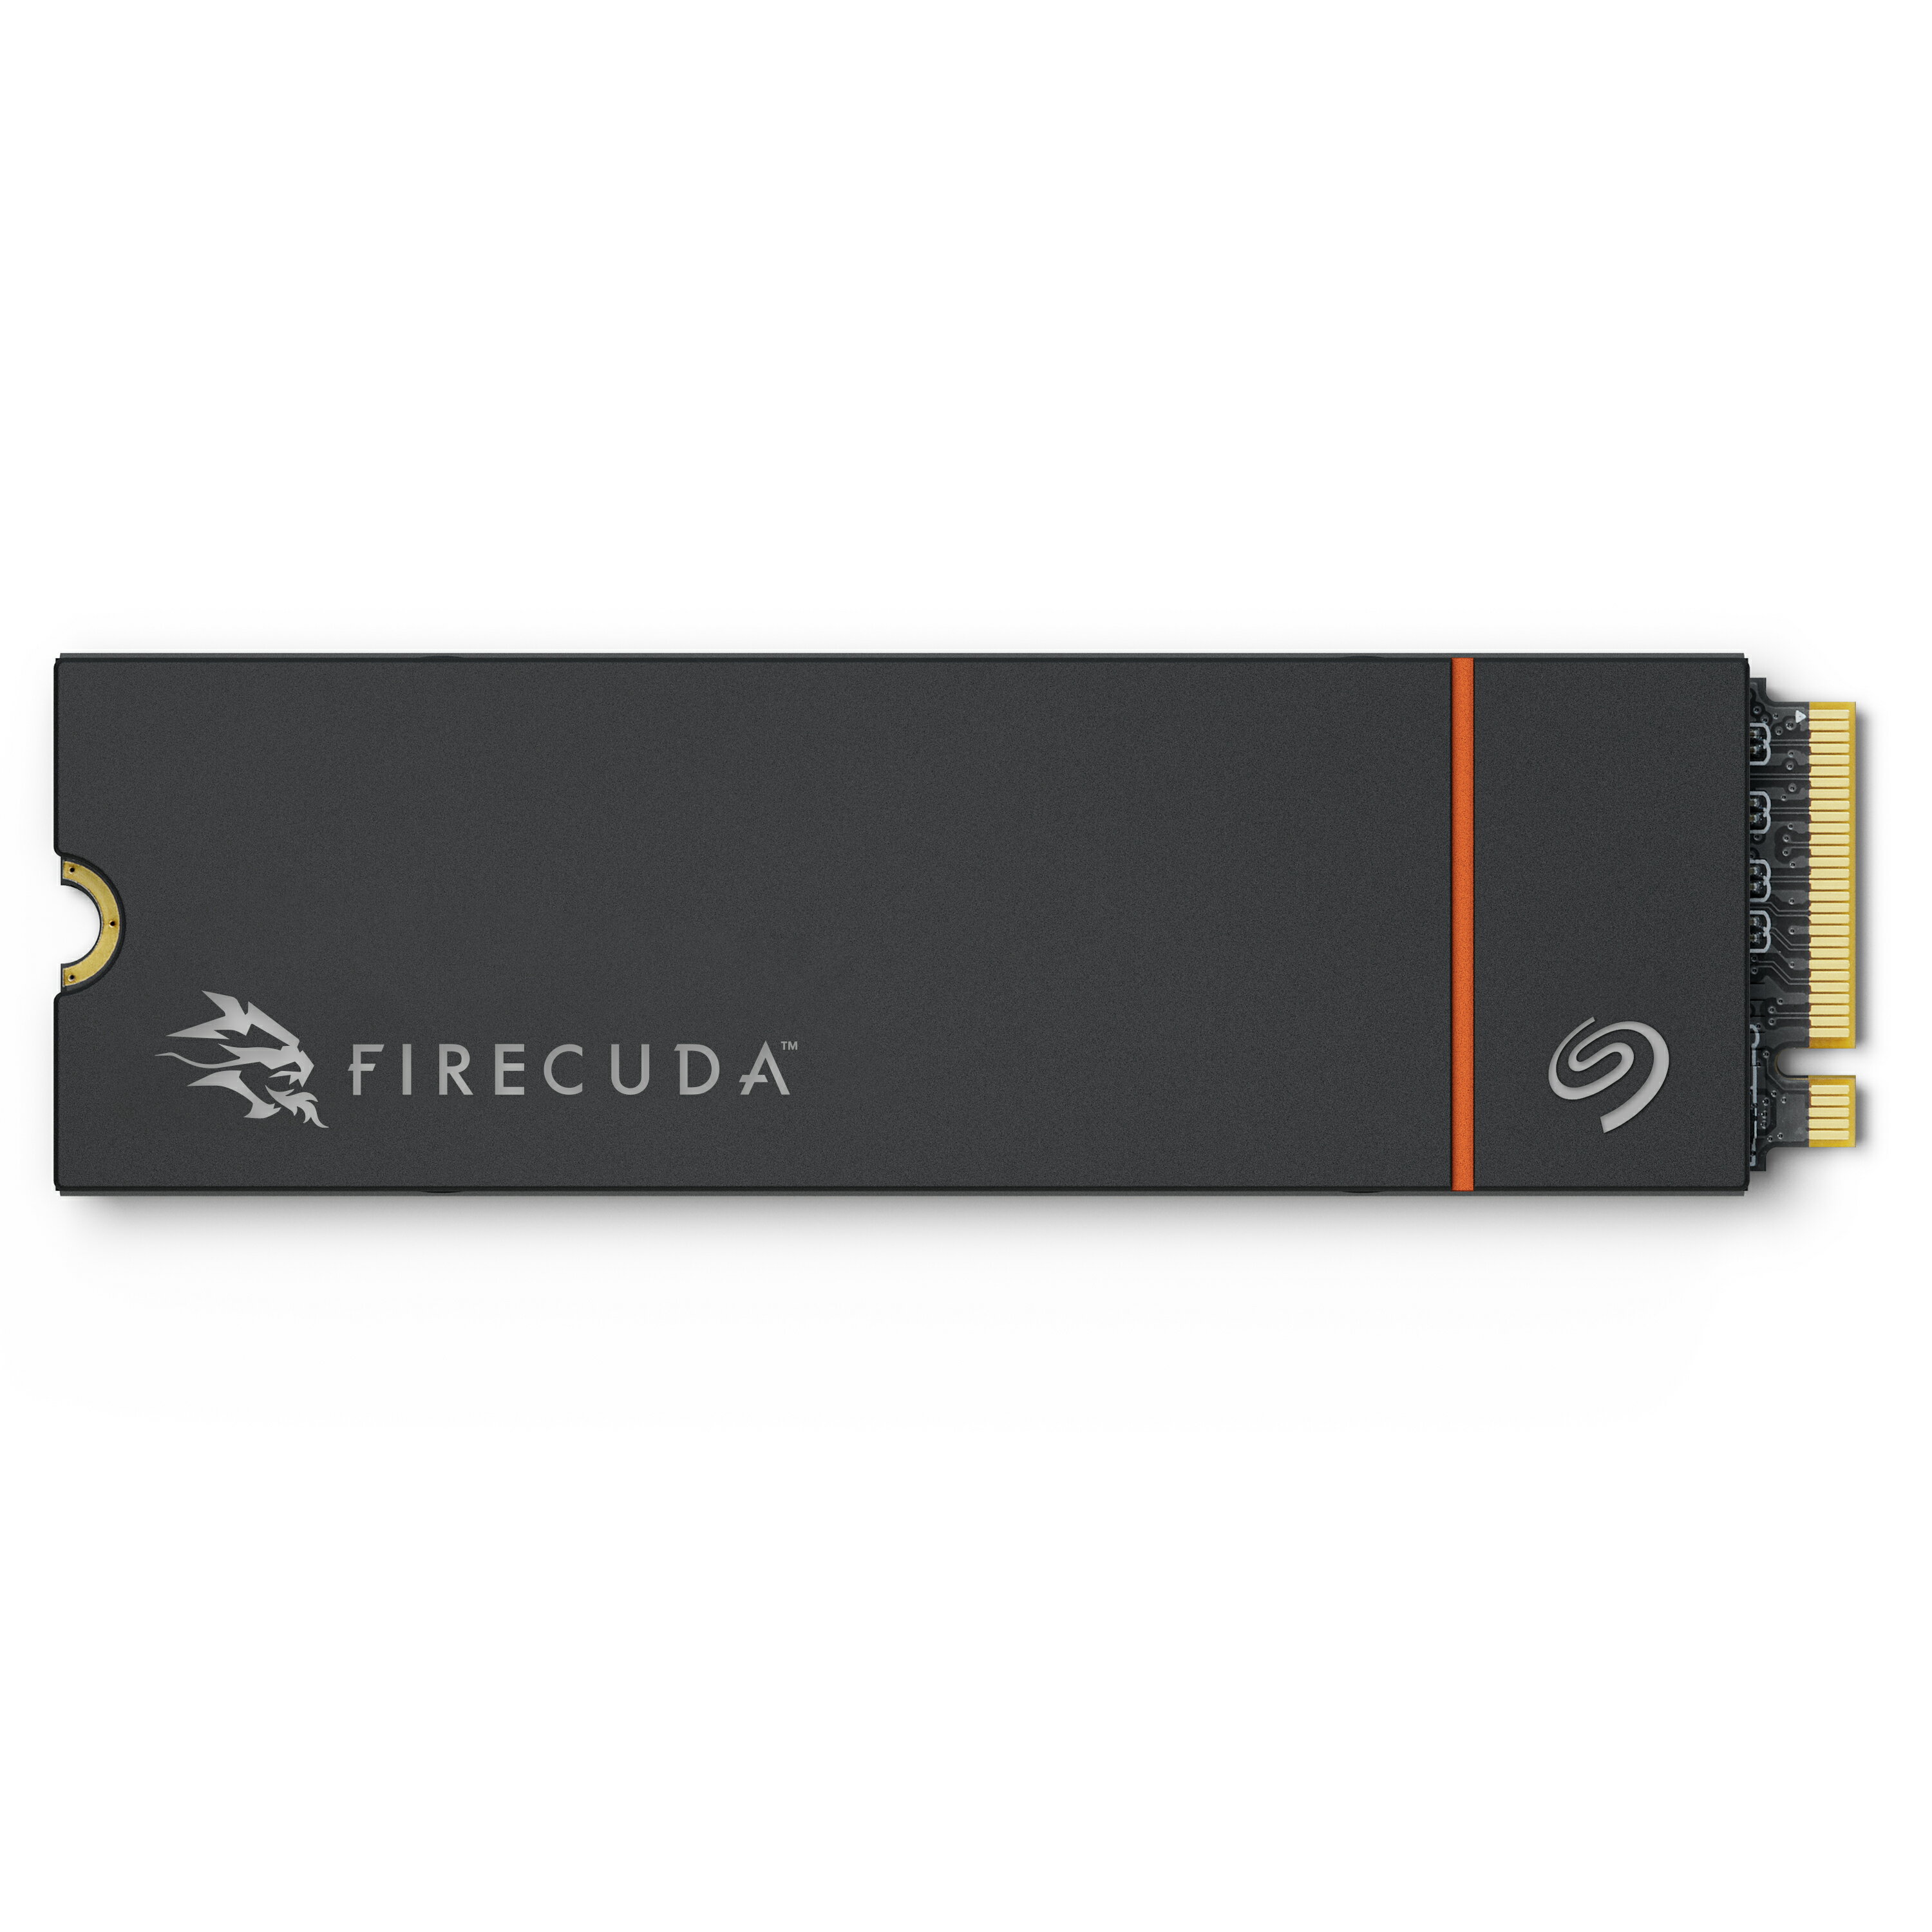 Seagate シーゲイト FireCuda 530 M.2 内蔵 SSD ヒートシンク付き 【PS5 動作確認済み】 500GB PCIe Gen4 x4 読取速度 7000MB/s 5年保証 データ復旧 3年付 正規代理店 ZP500GM3A023